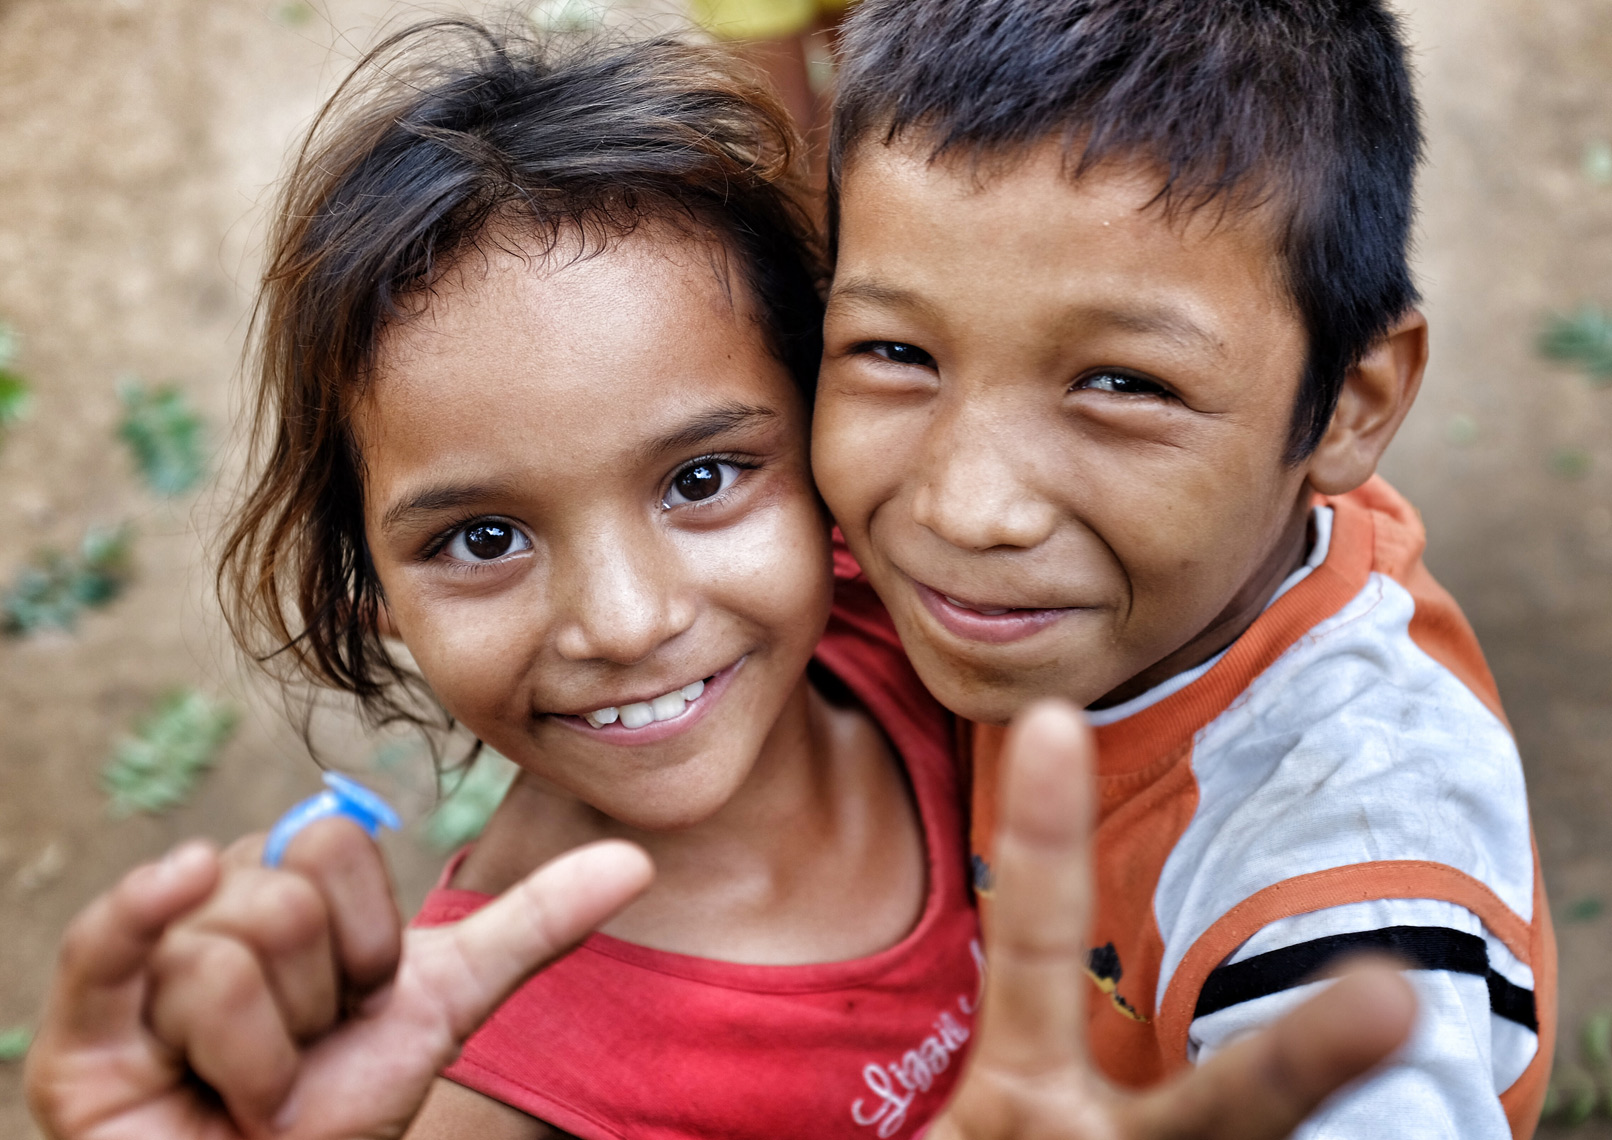 The spirited children of Granada, Nicaragua